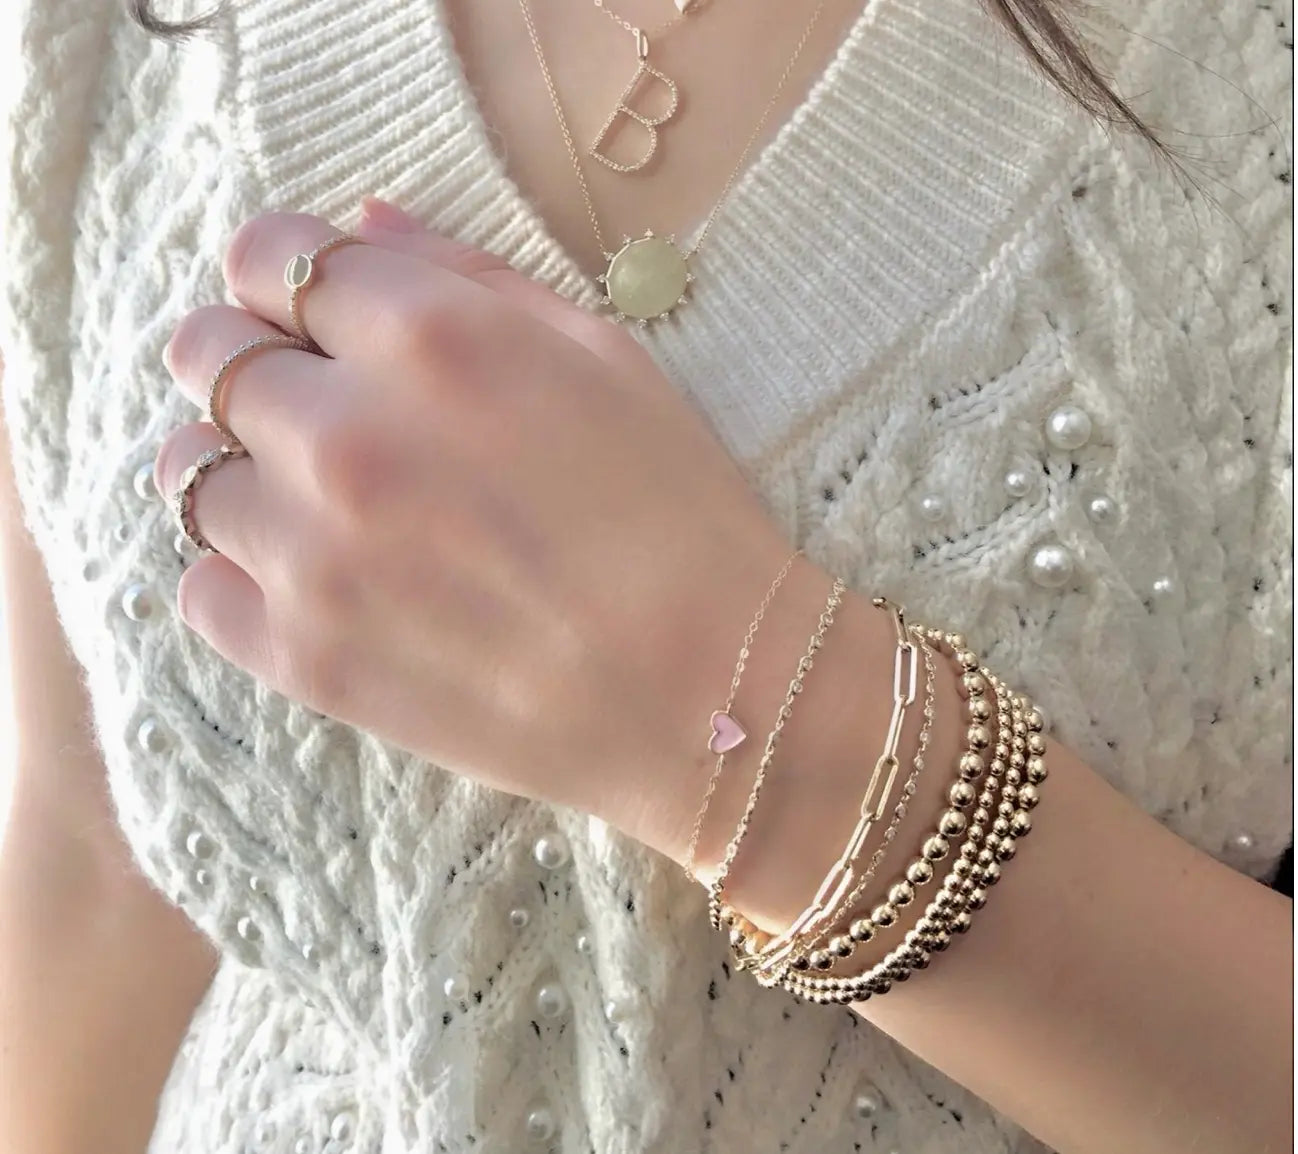 Mini Enamel Heart Gold Chain Bracelet